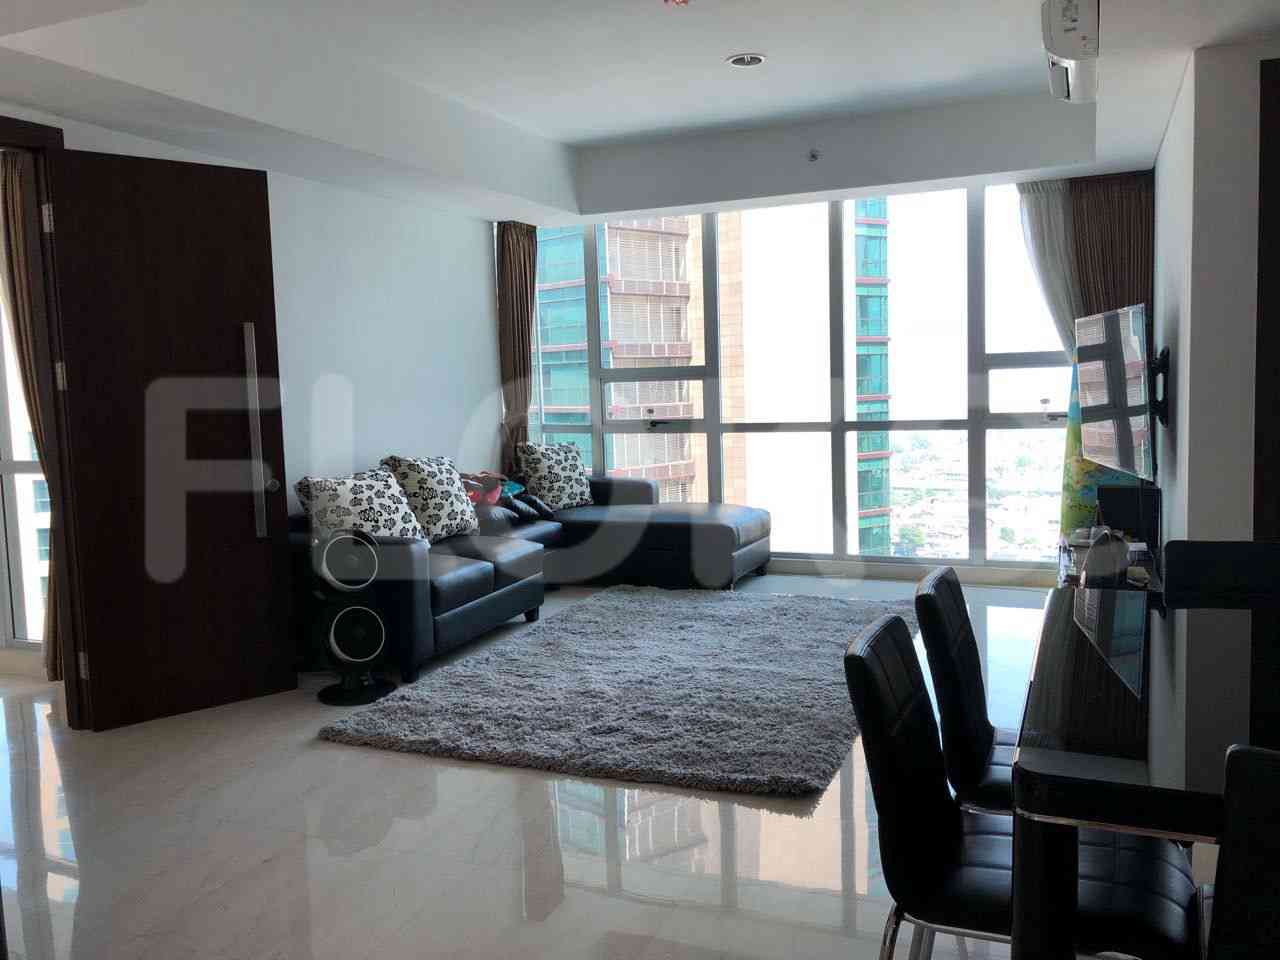 2 Bedroom on 2nd Floor for Rent in Kemang Village Residence - fkefc9 1